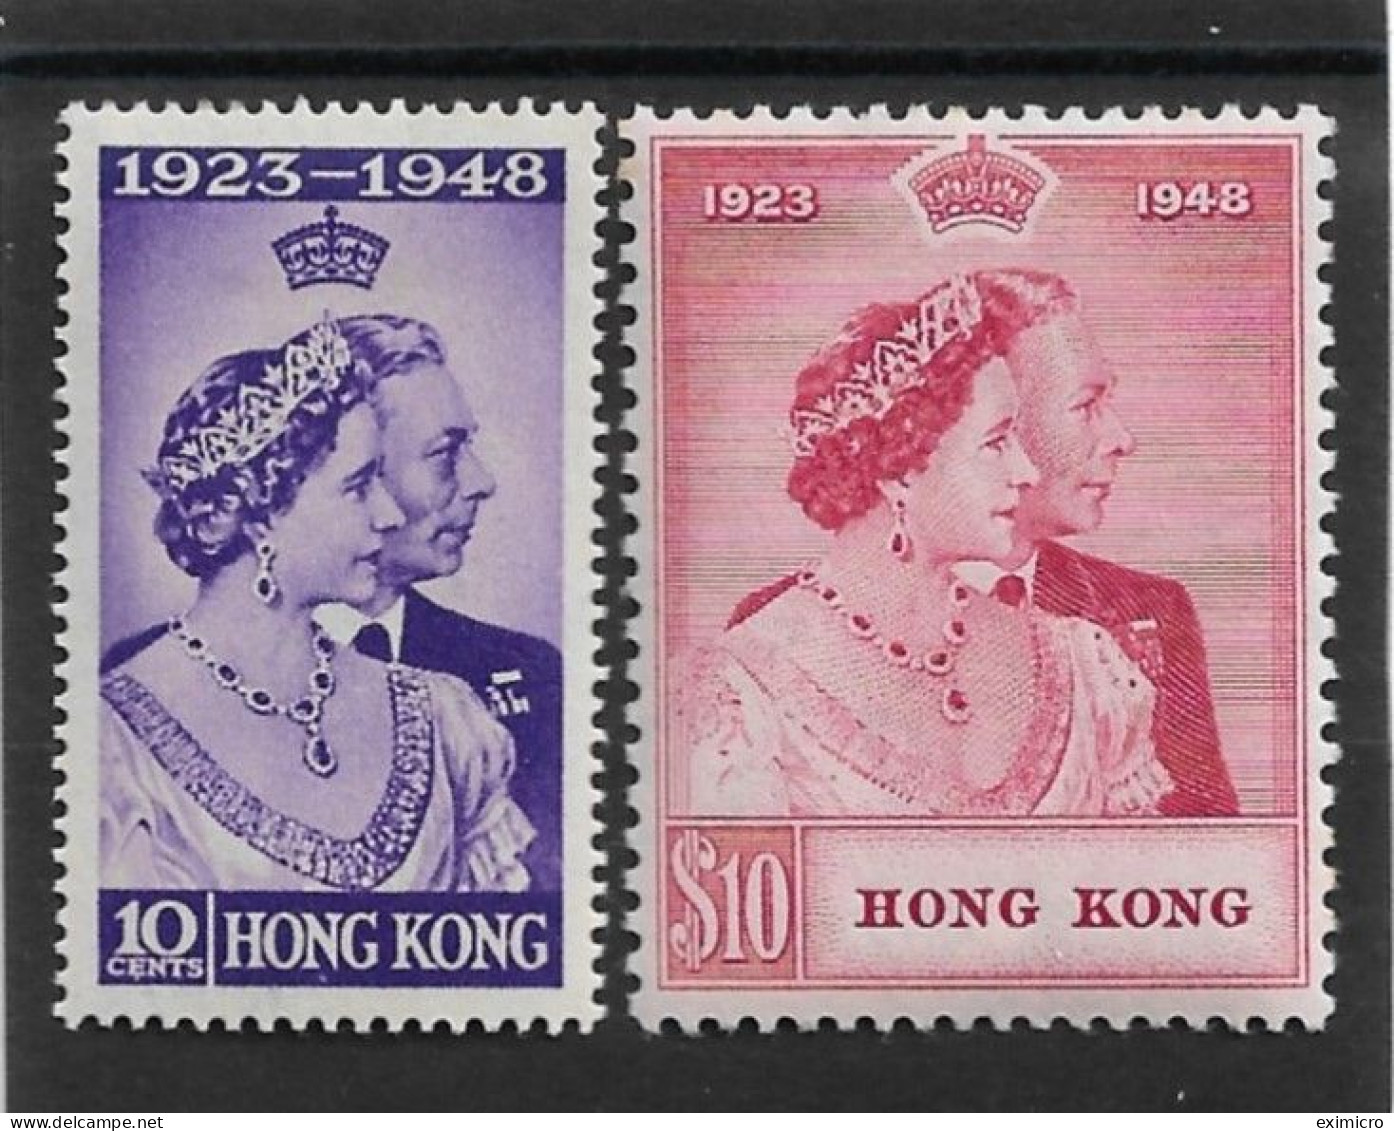 HONG KONG 1948 SILVER WEDDING SET LIGHTLY MOUNTED MINT Cat £278+ - Nuevos